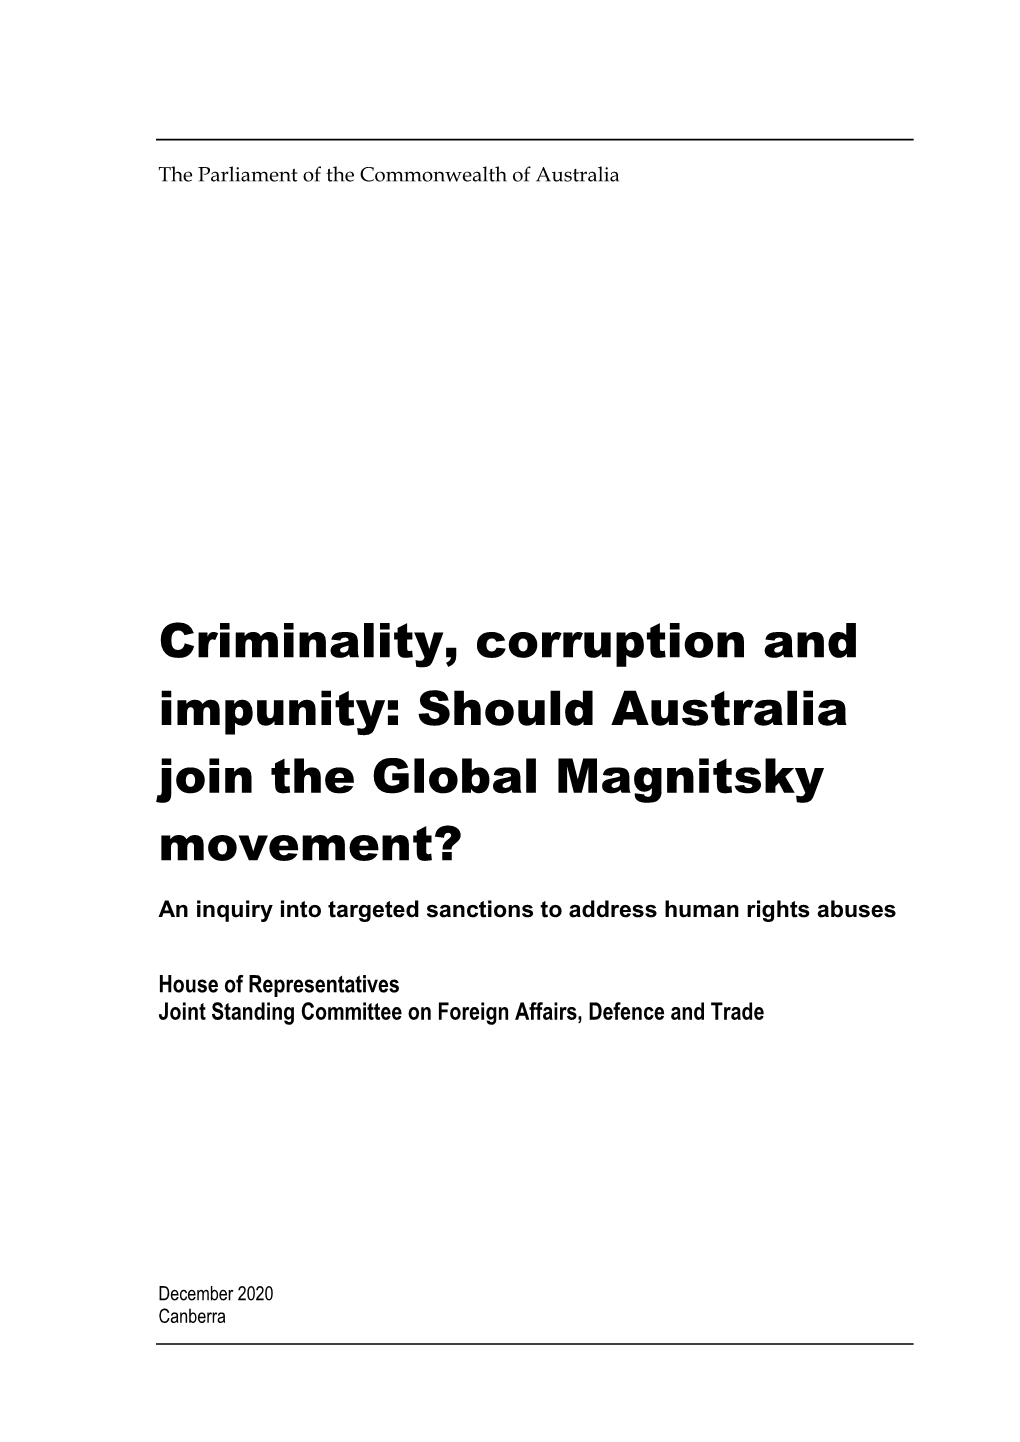 Criminality, Corruption and Impunity: Should Australia Join the Global Magnitsky Movement?